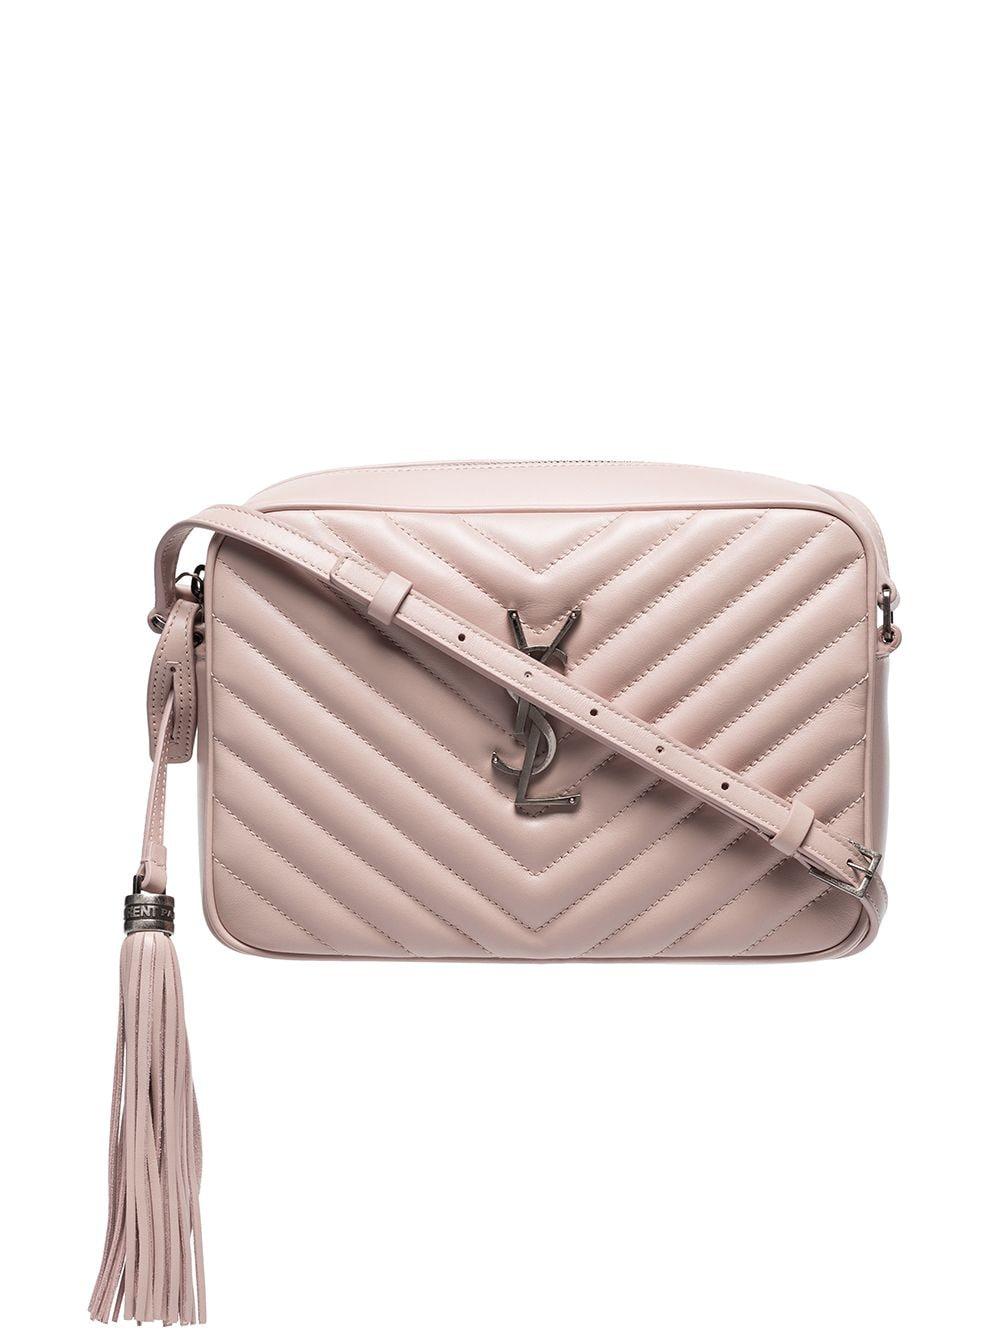 Saint Laurent Mini Lou Bag in Pink | Lyst